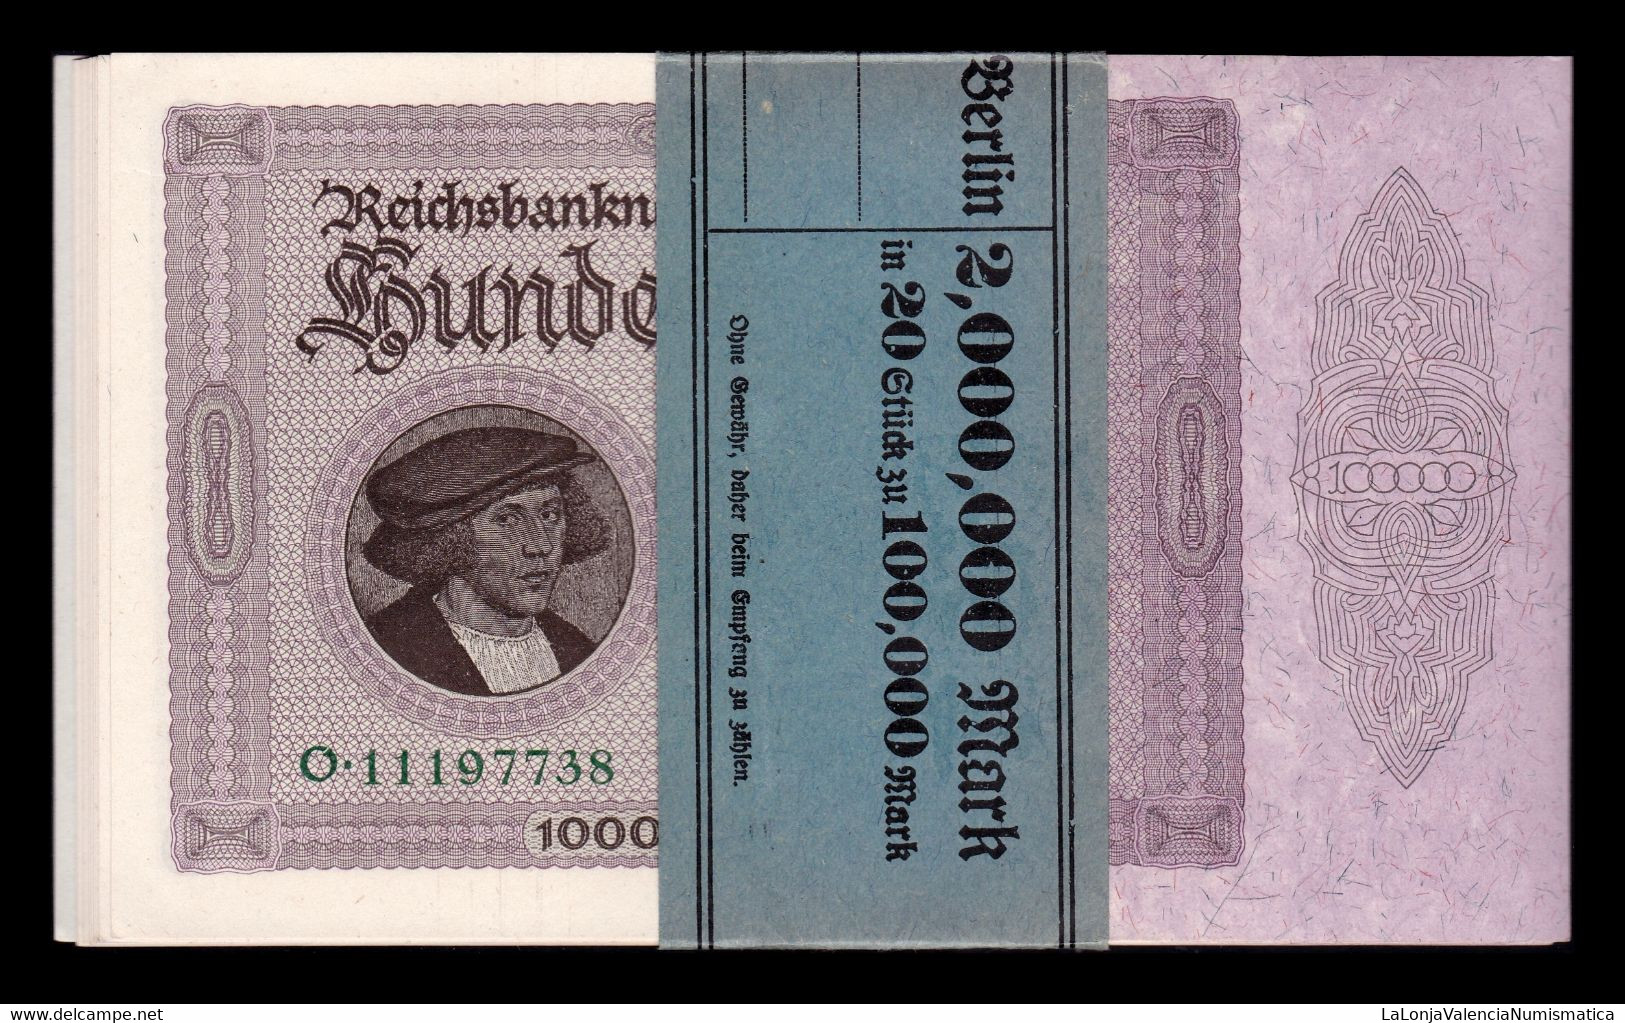 Alemania Germany 100000 Mark 1923 Pick 83a SC UNC - 100000 Mark